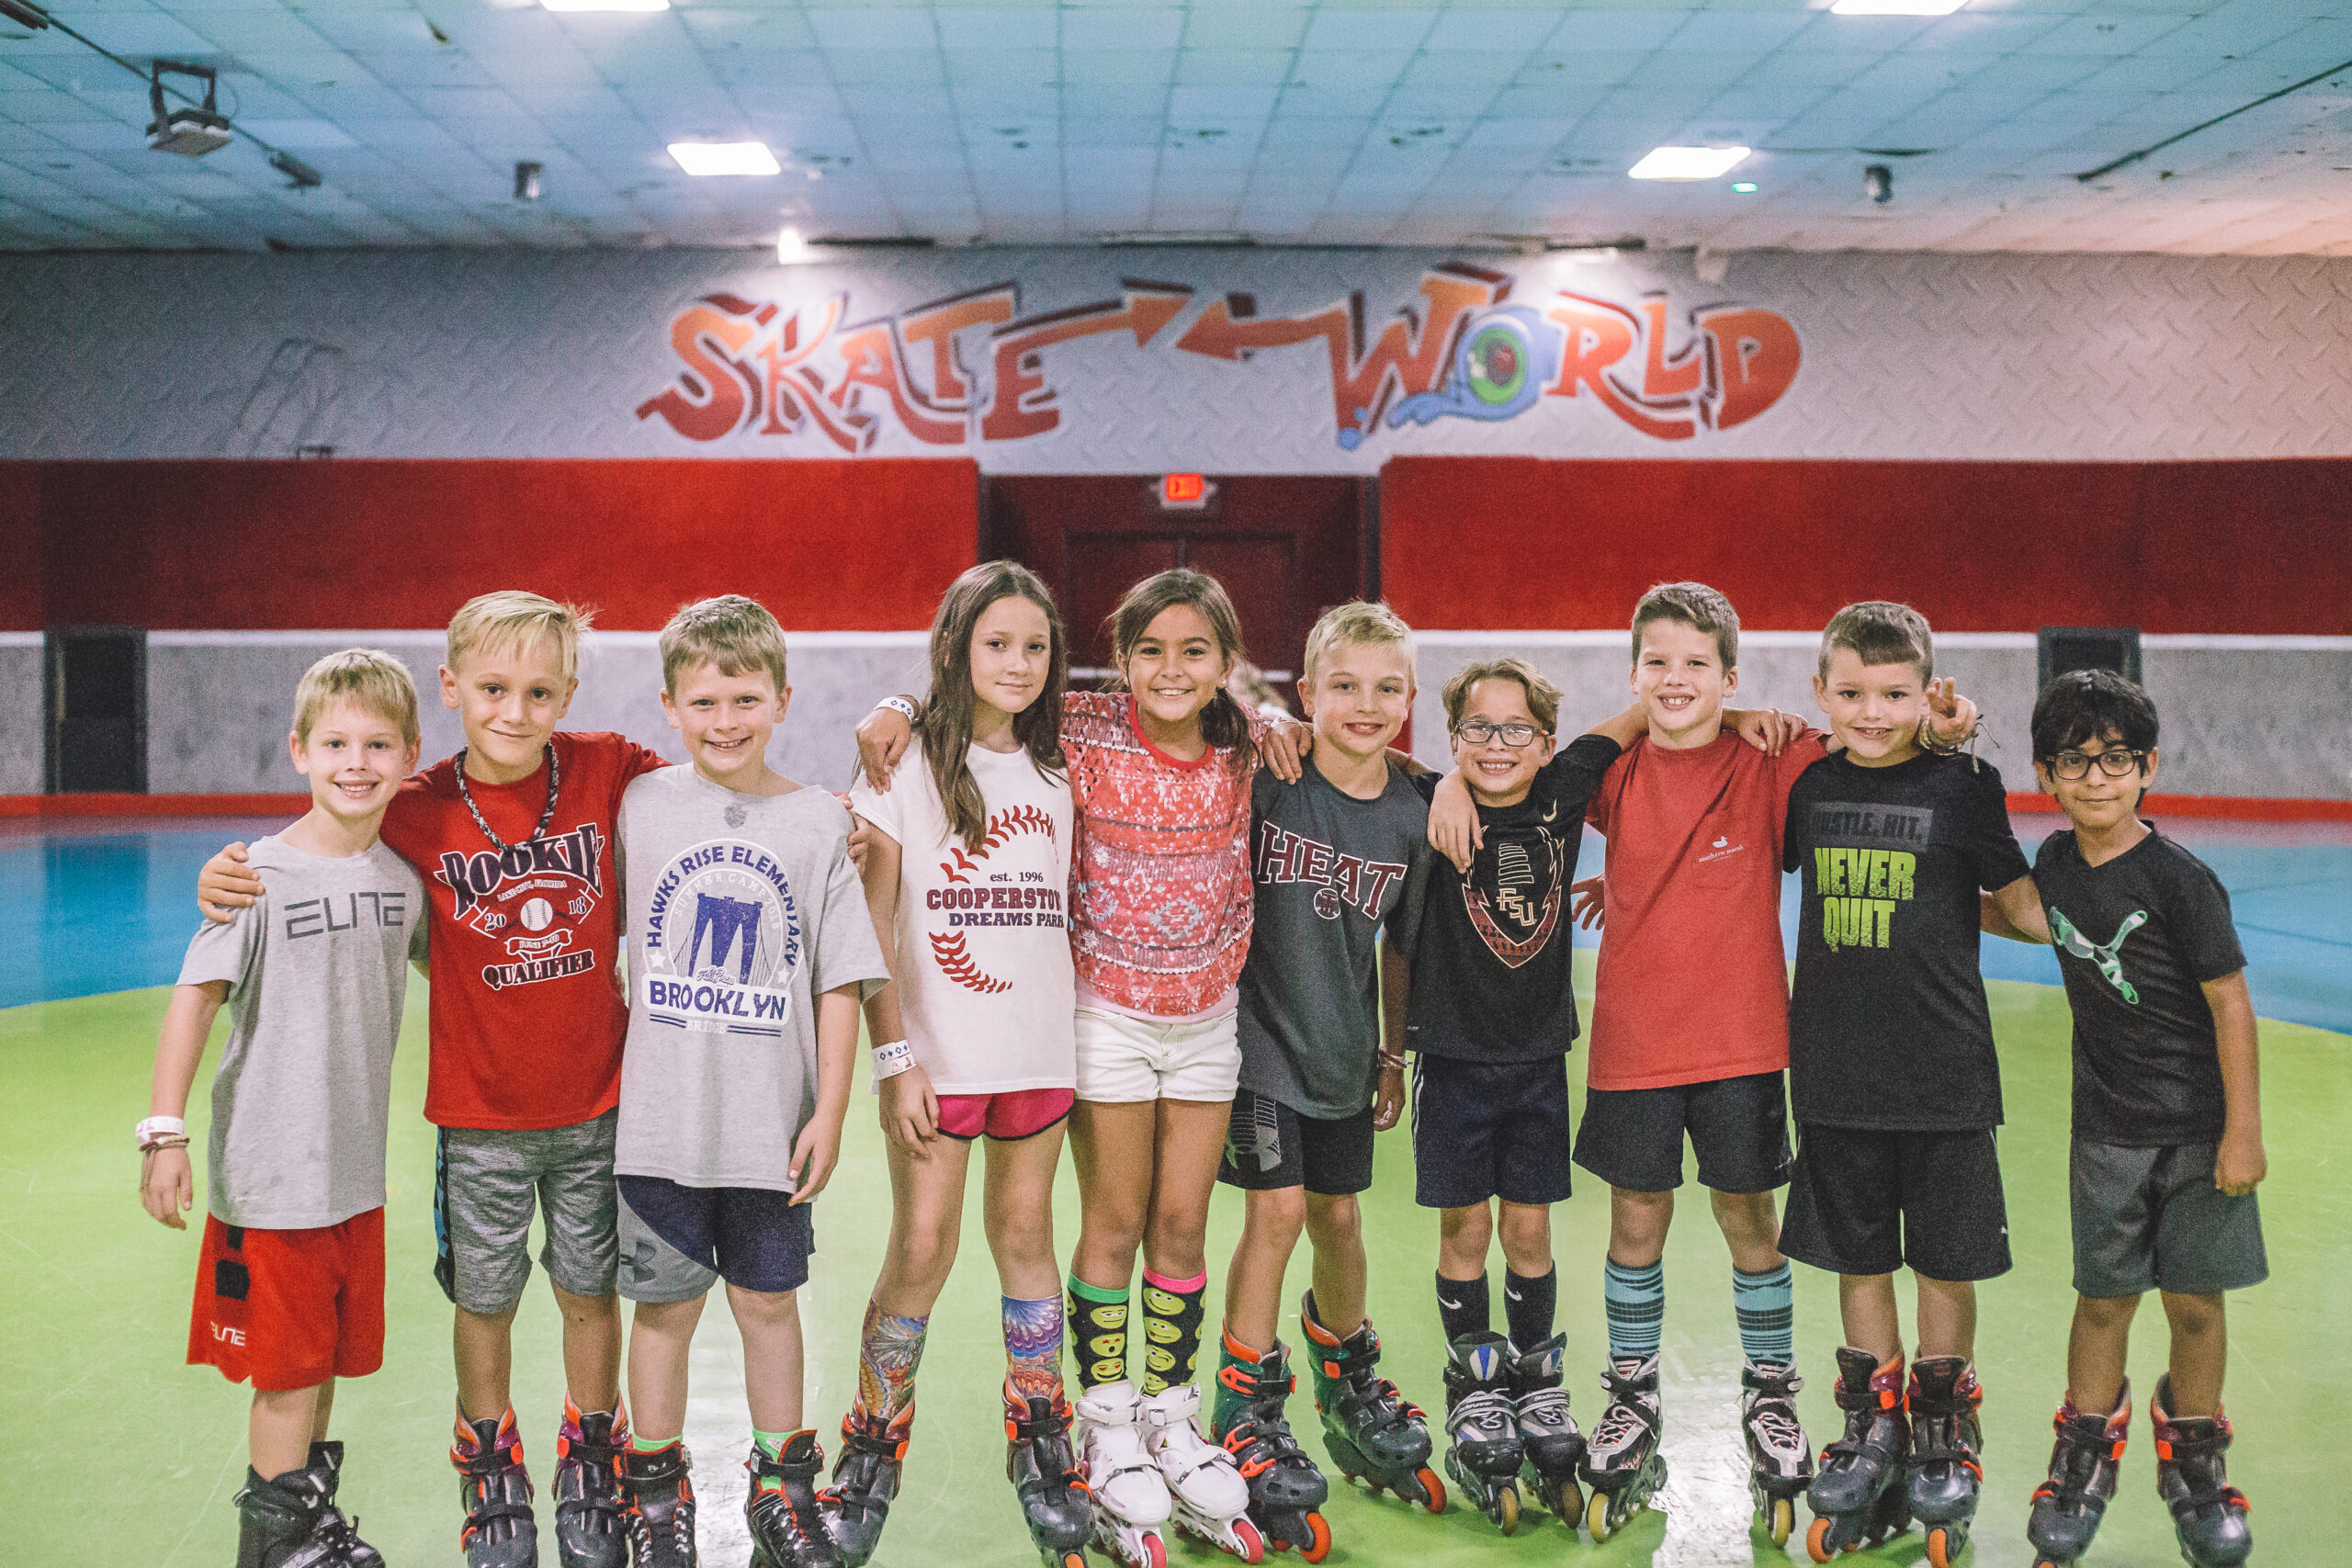 Kids Skate Free, Kids Skate Free Club, Family Fun, Summer Camp, Summer Camps, Groups and Schools, Skate World, Skate World Center